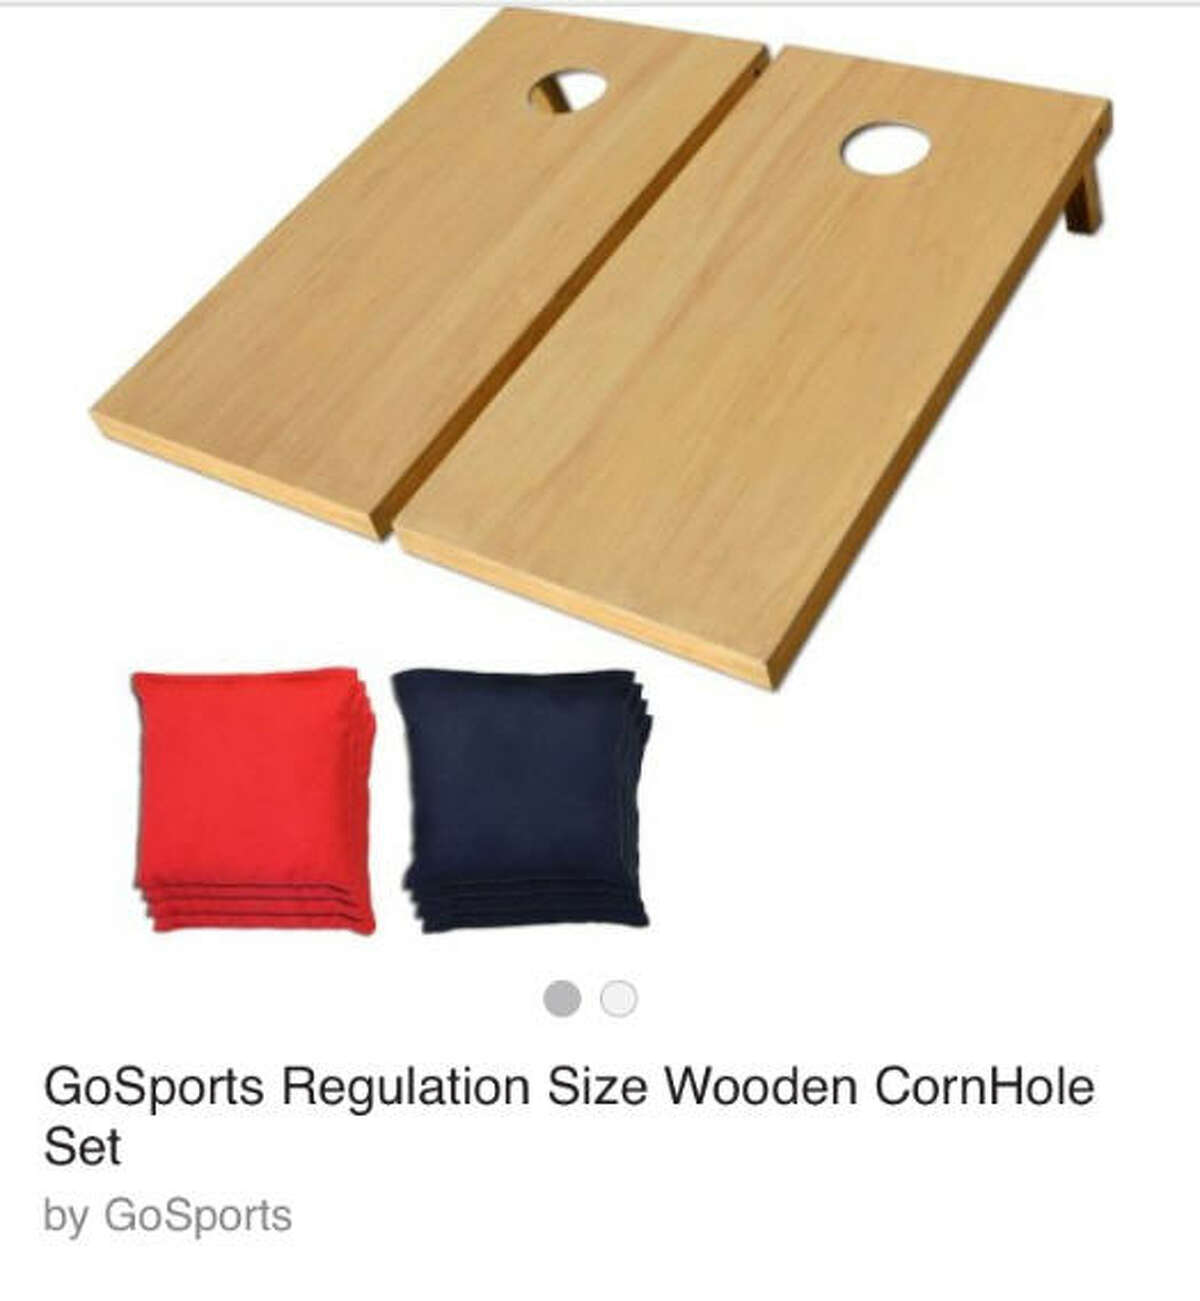 GoSports Regulation Size Wooden CornHole Set $139.99 Find it here.